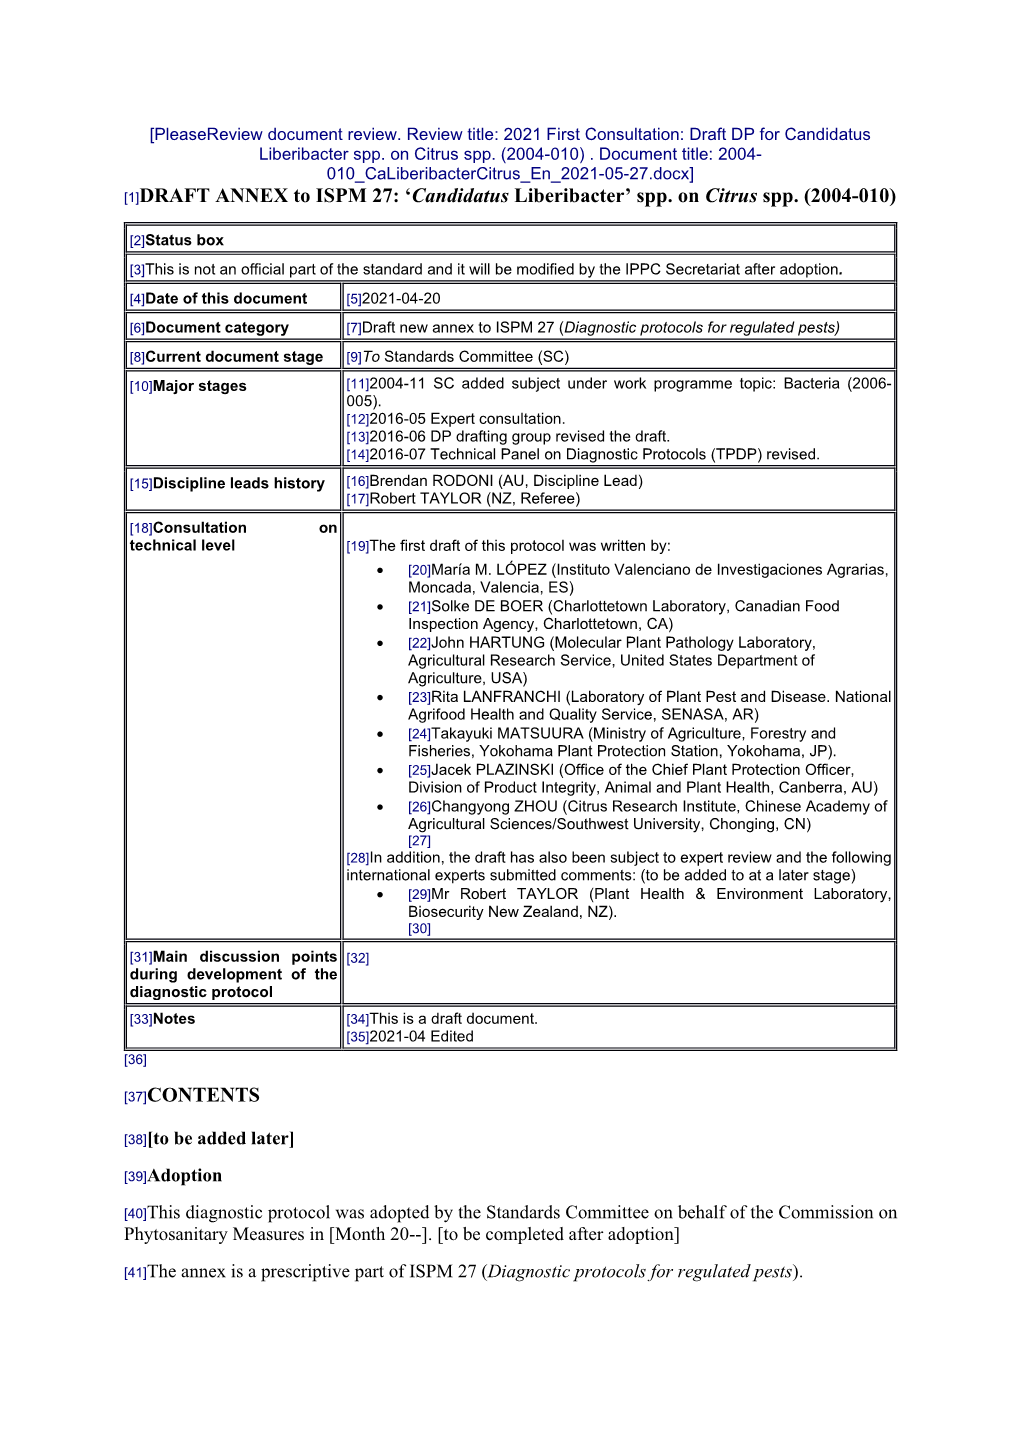 [1]DRAFT ANNEX to ISPM 27: 'Candidatus Liberibacter' Spp. on Citrus Spp. (2004-010) [37]CONTENTS